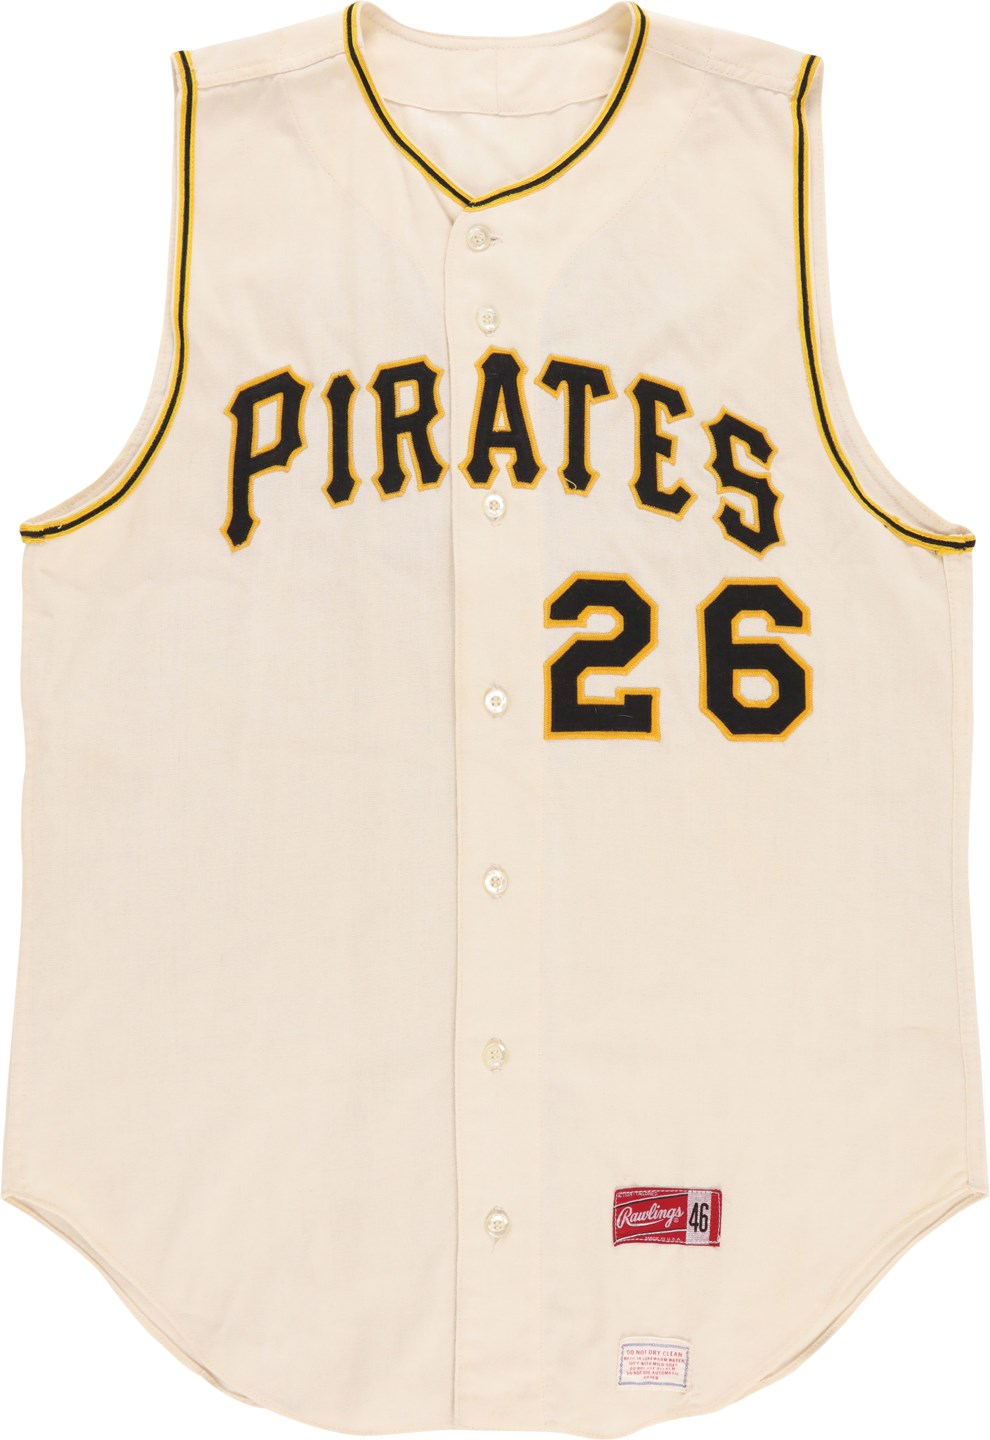 Baseball Equipment - Circa 1967 Pittsburgh Pirates Game Issued Jersey